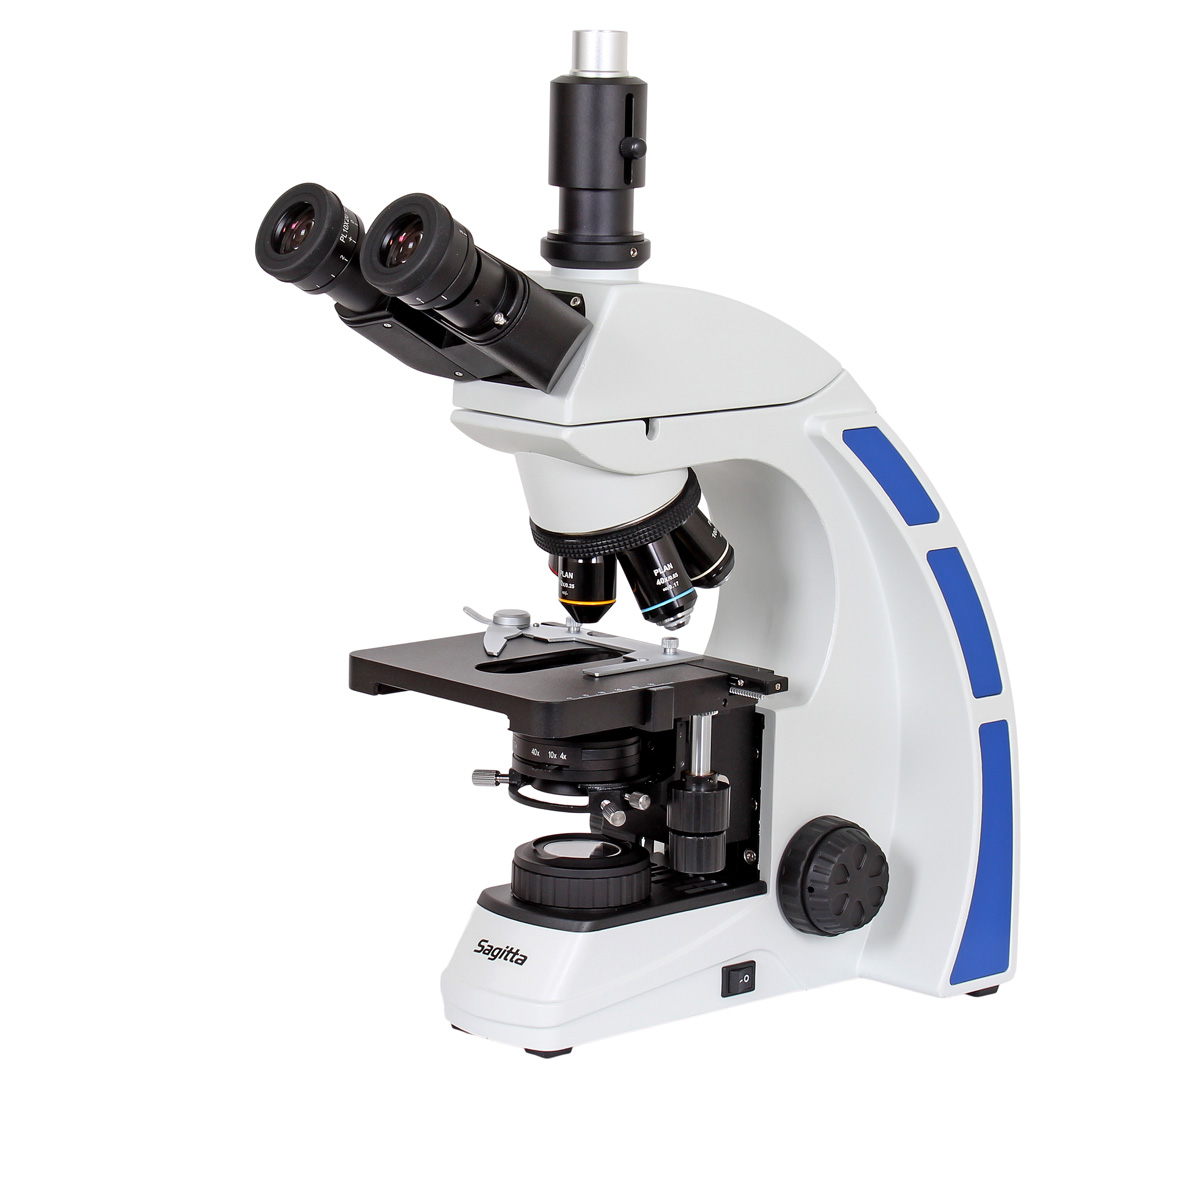 Mikroskop trinokulärt SL-750